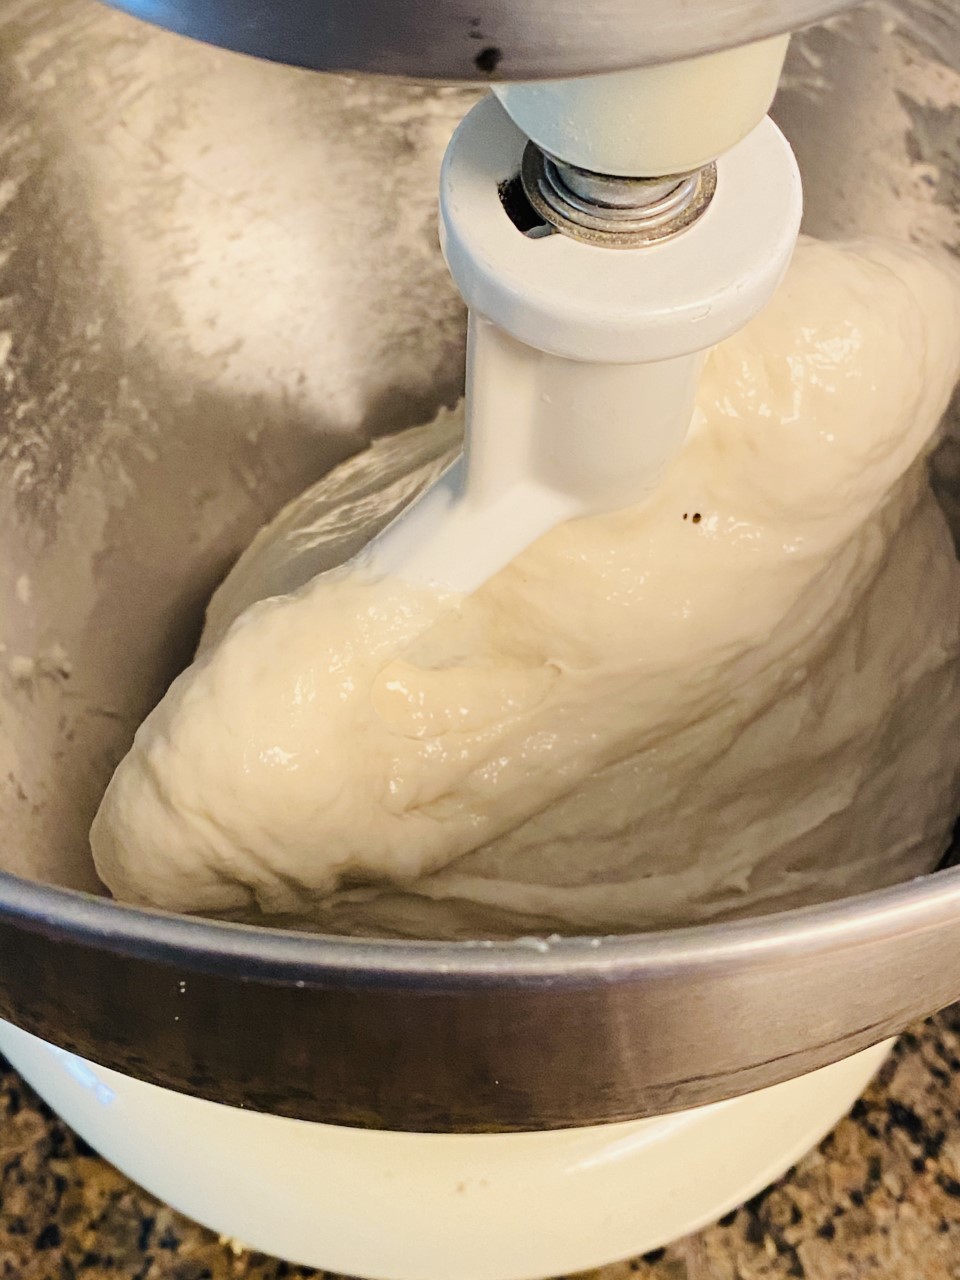 Ciabatta dough mixing in a stand mixer.